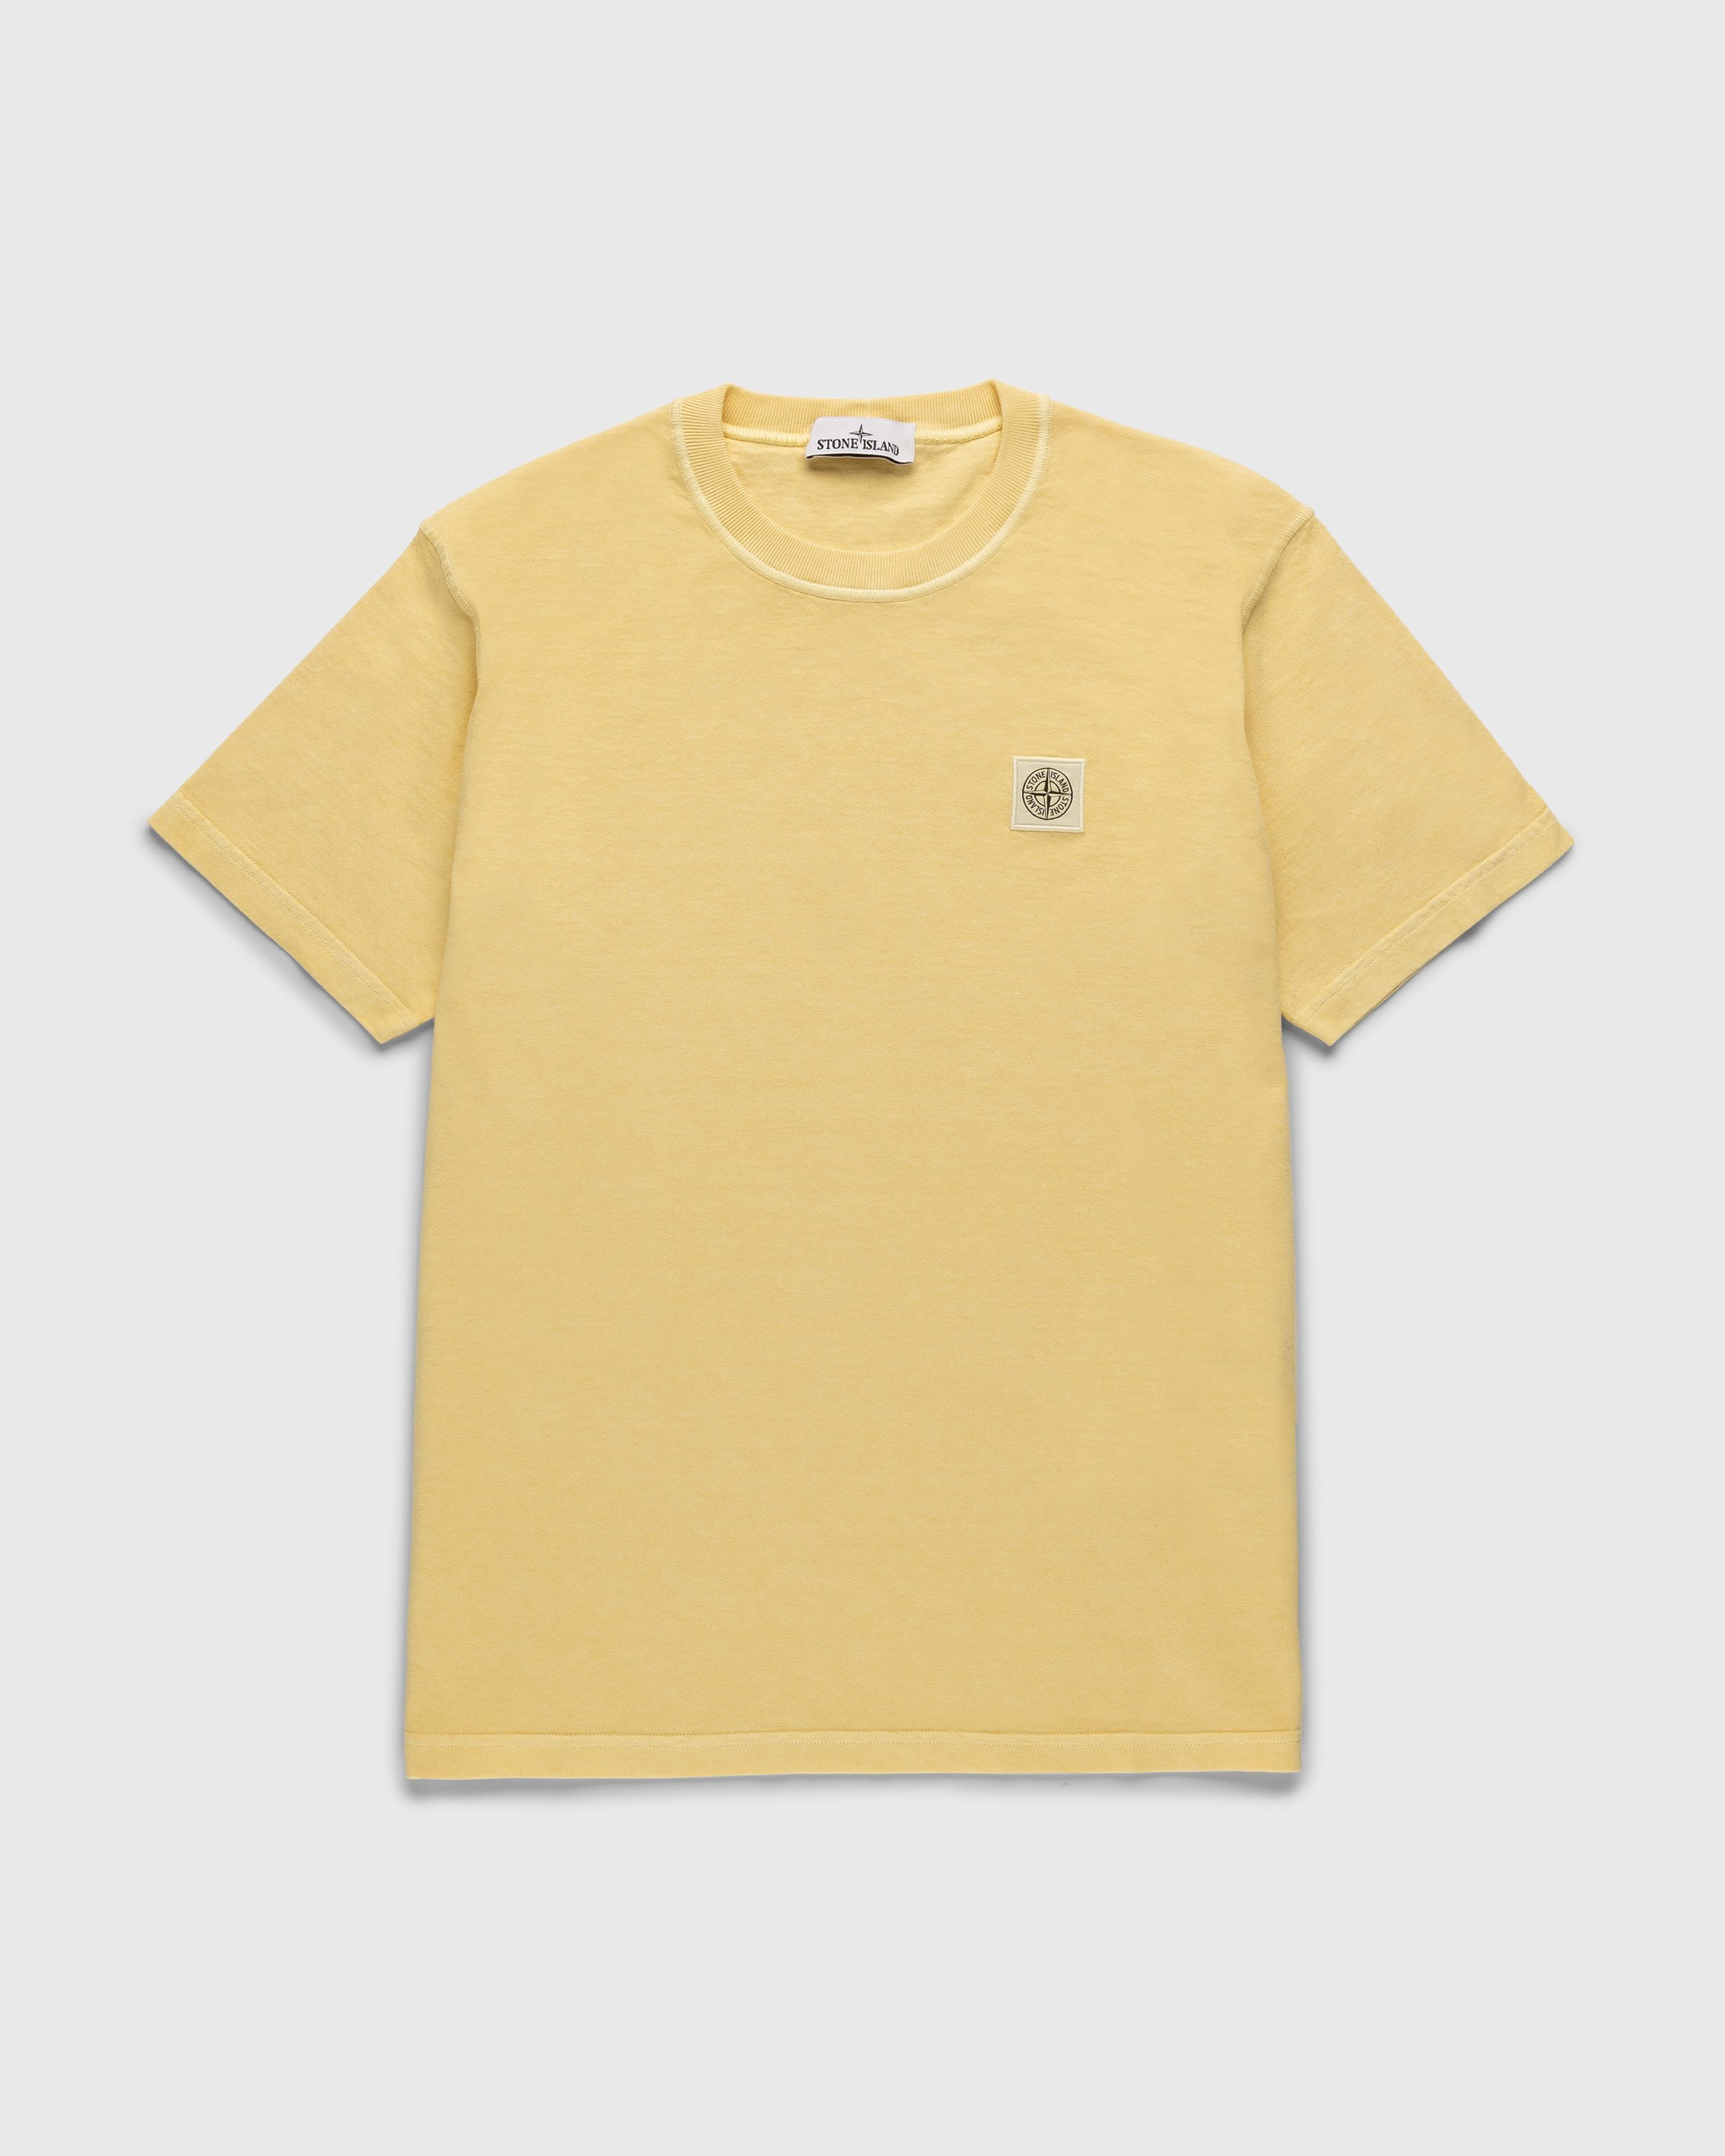 Stone Island - Fissato T-Shirt Butter - Clothing - Yellow - Image 1